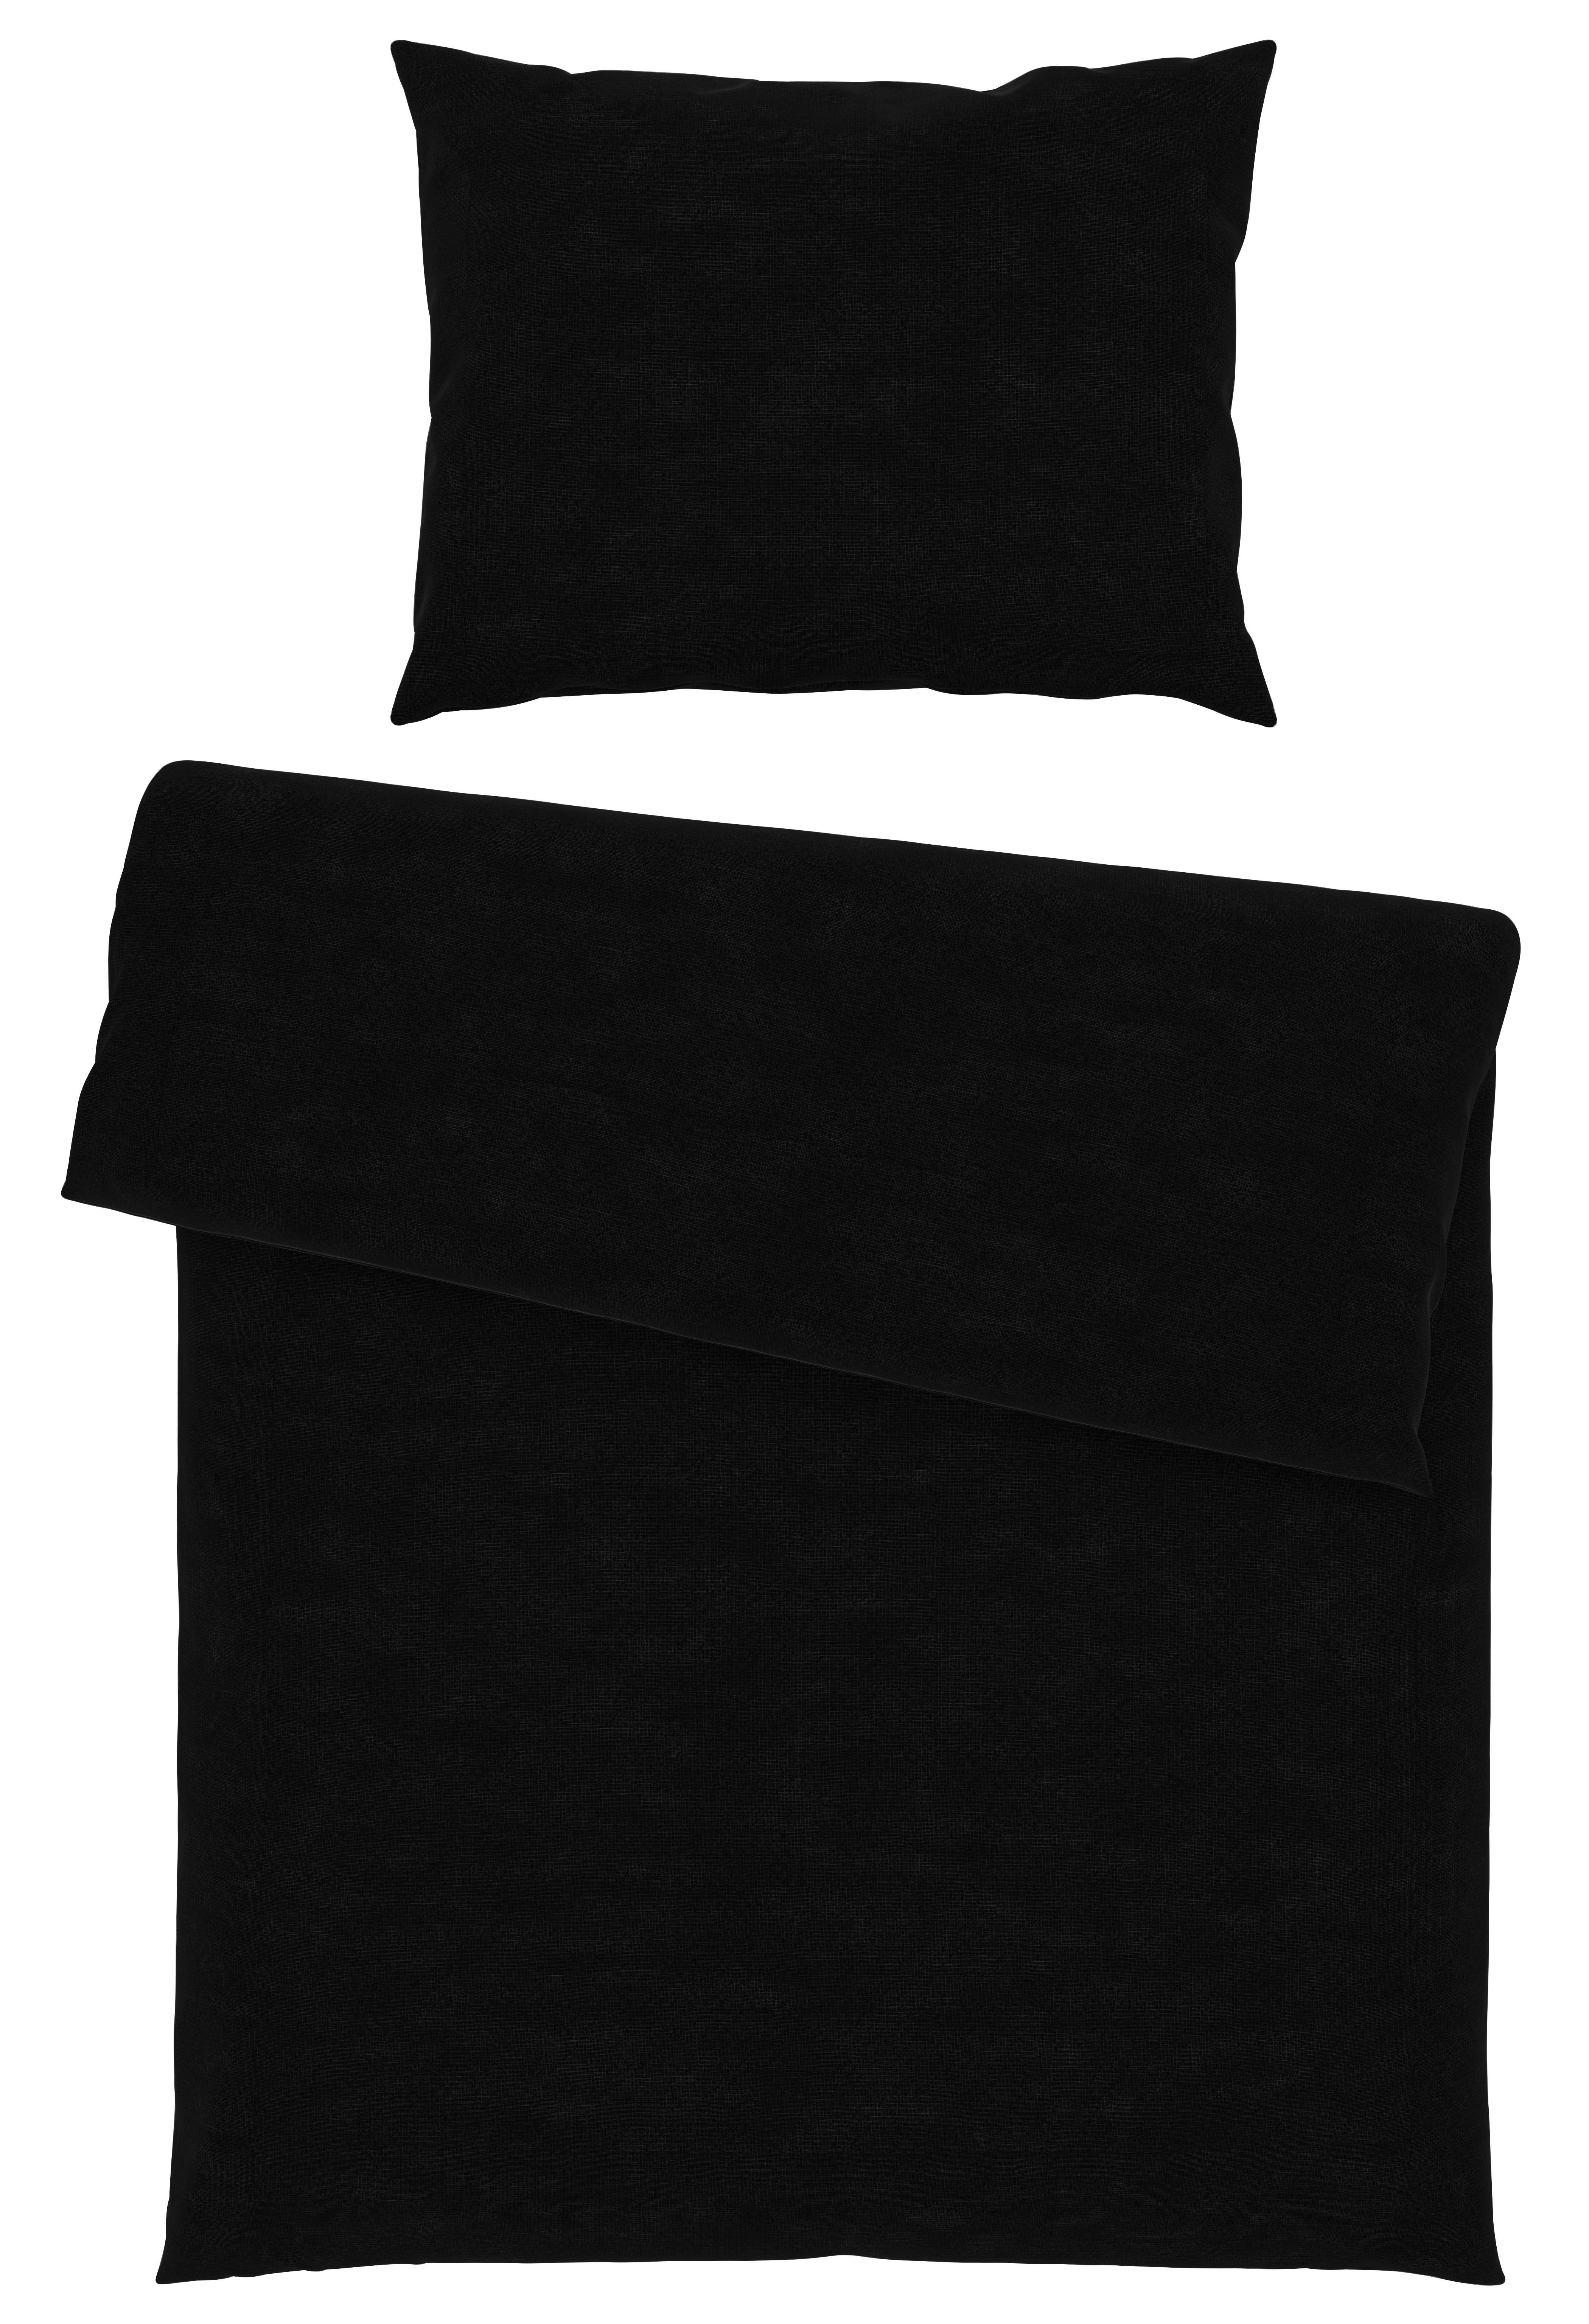 Posteľná Bielizeň Iris, 140/200cm, Čierna - čierna, Moderný, textil (140/200cm) - Modern Living